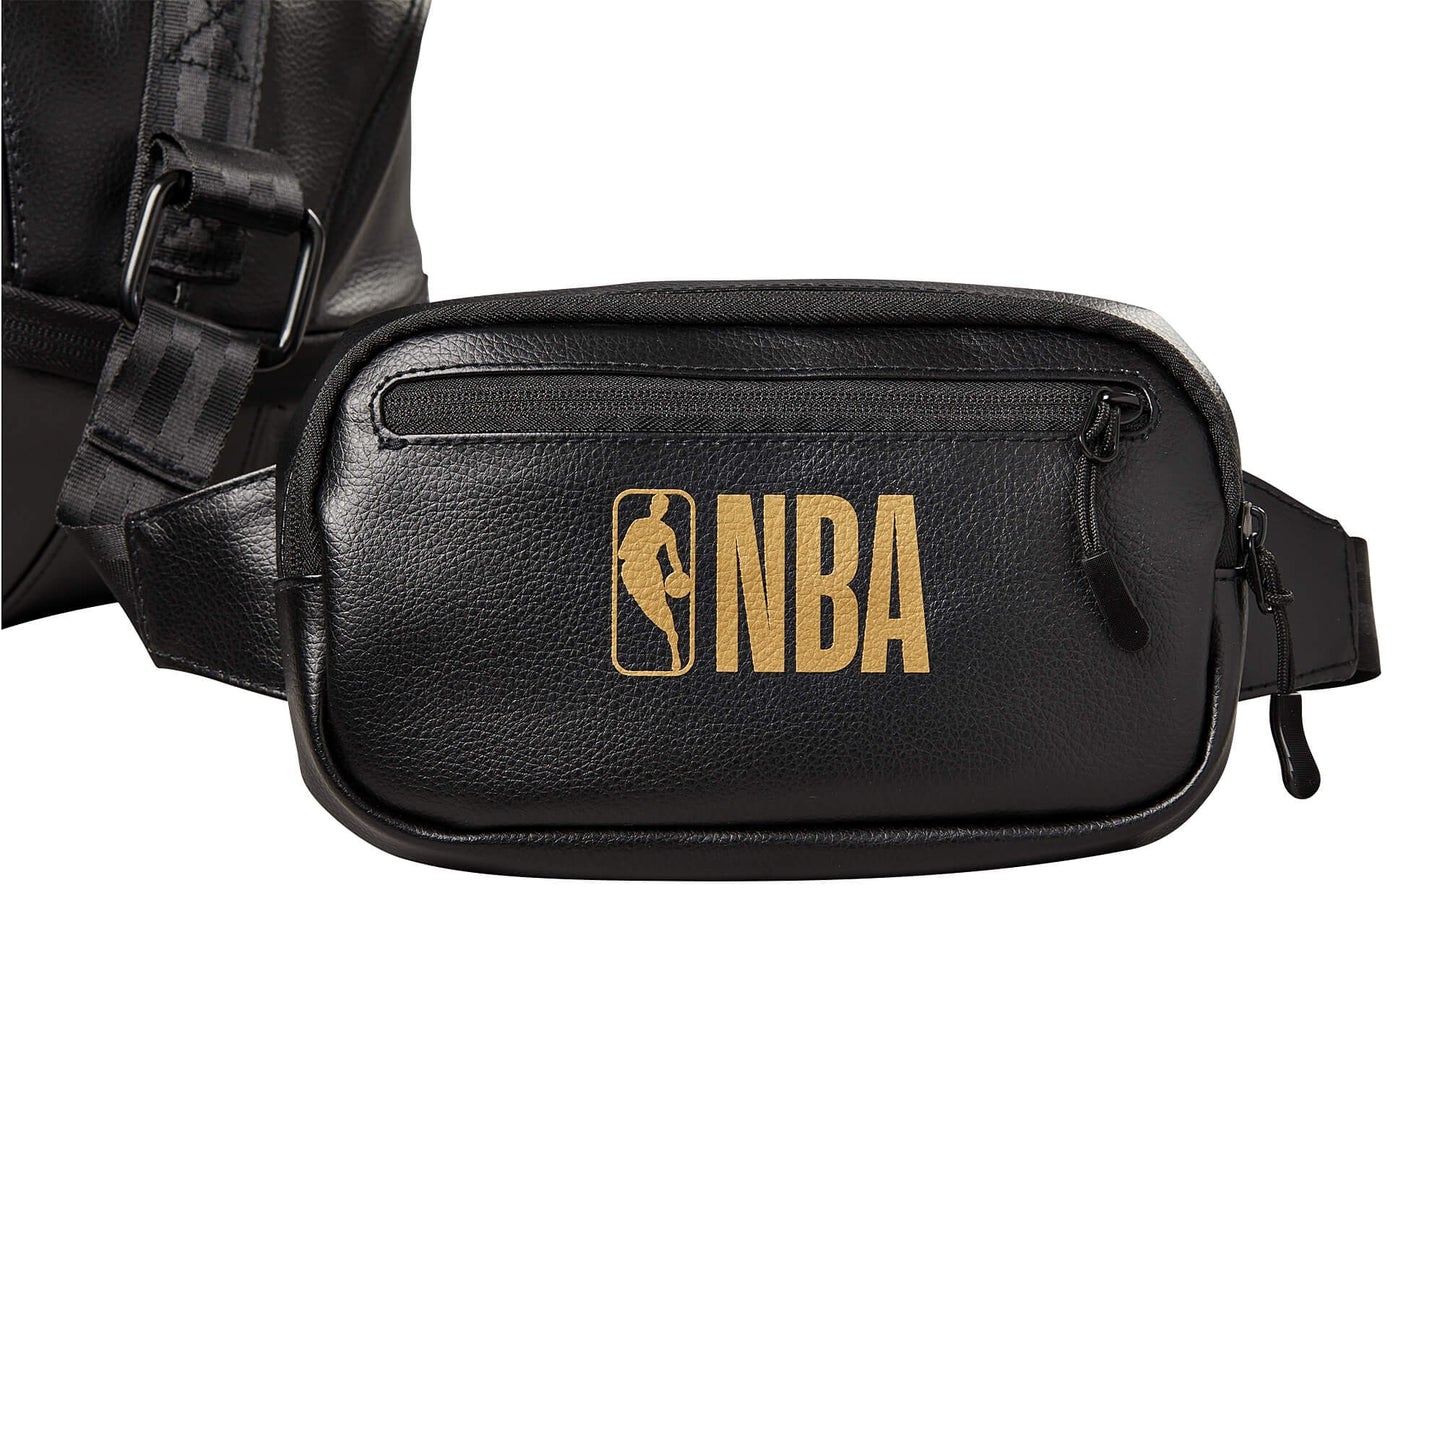 Wilson NBA 3 In 1 Basketball Carry Bag - Black/Gold